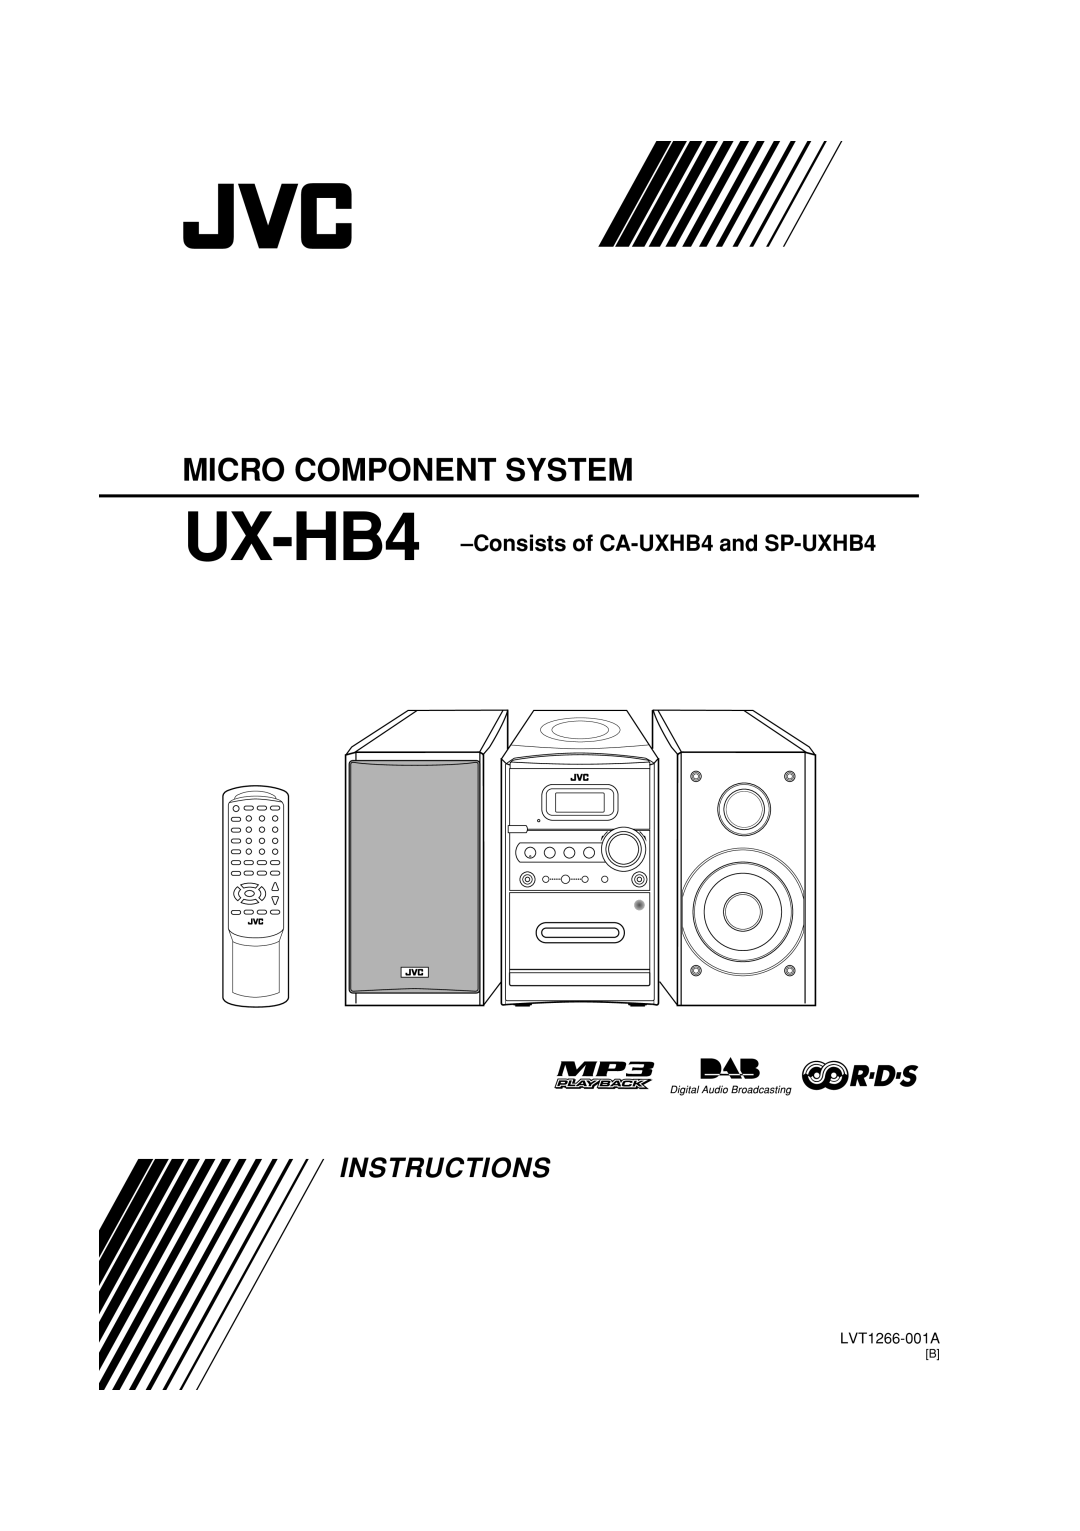 JVC LVT1266-001A manual Instructions, Micro Component System, UX-HB4 -Consistsof CA-UXHB4and SP-UXHB4 